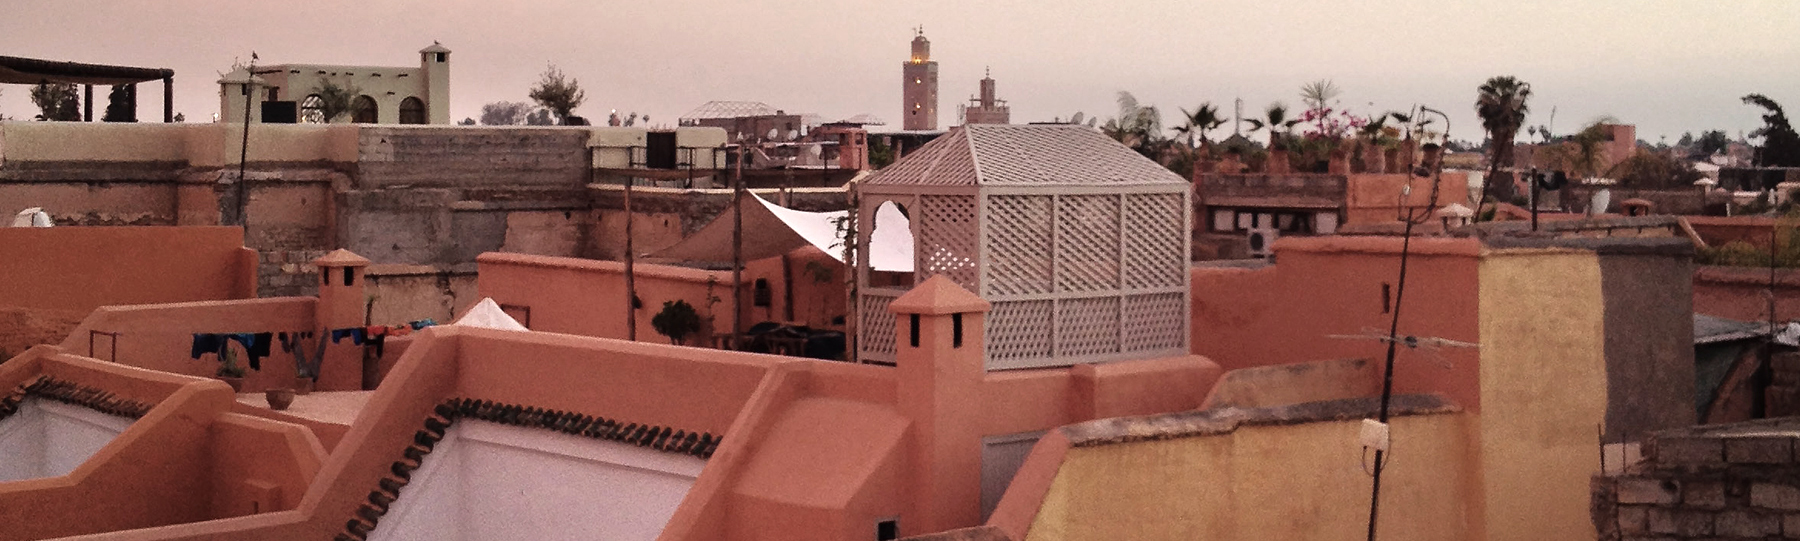 Destination: Marrakesh| Paper Massimo Dutti